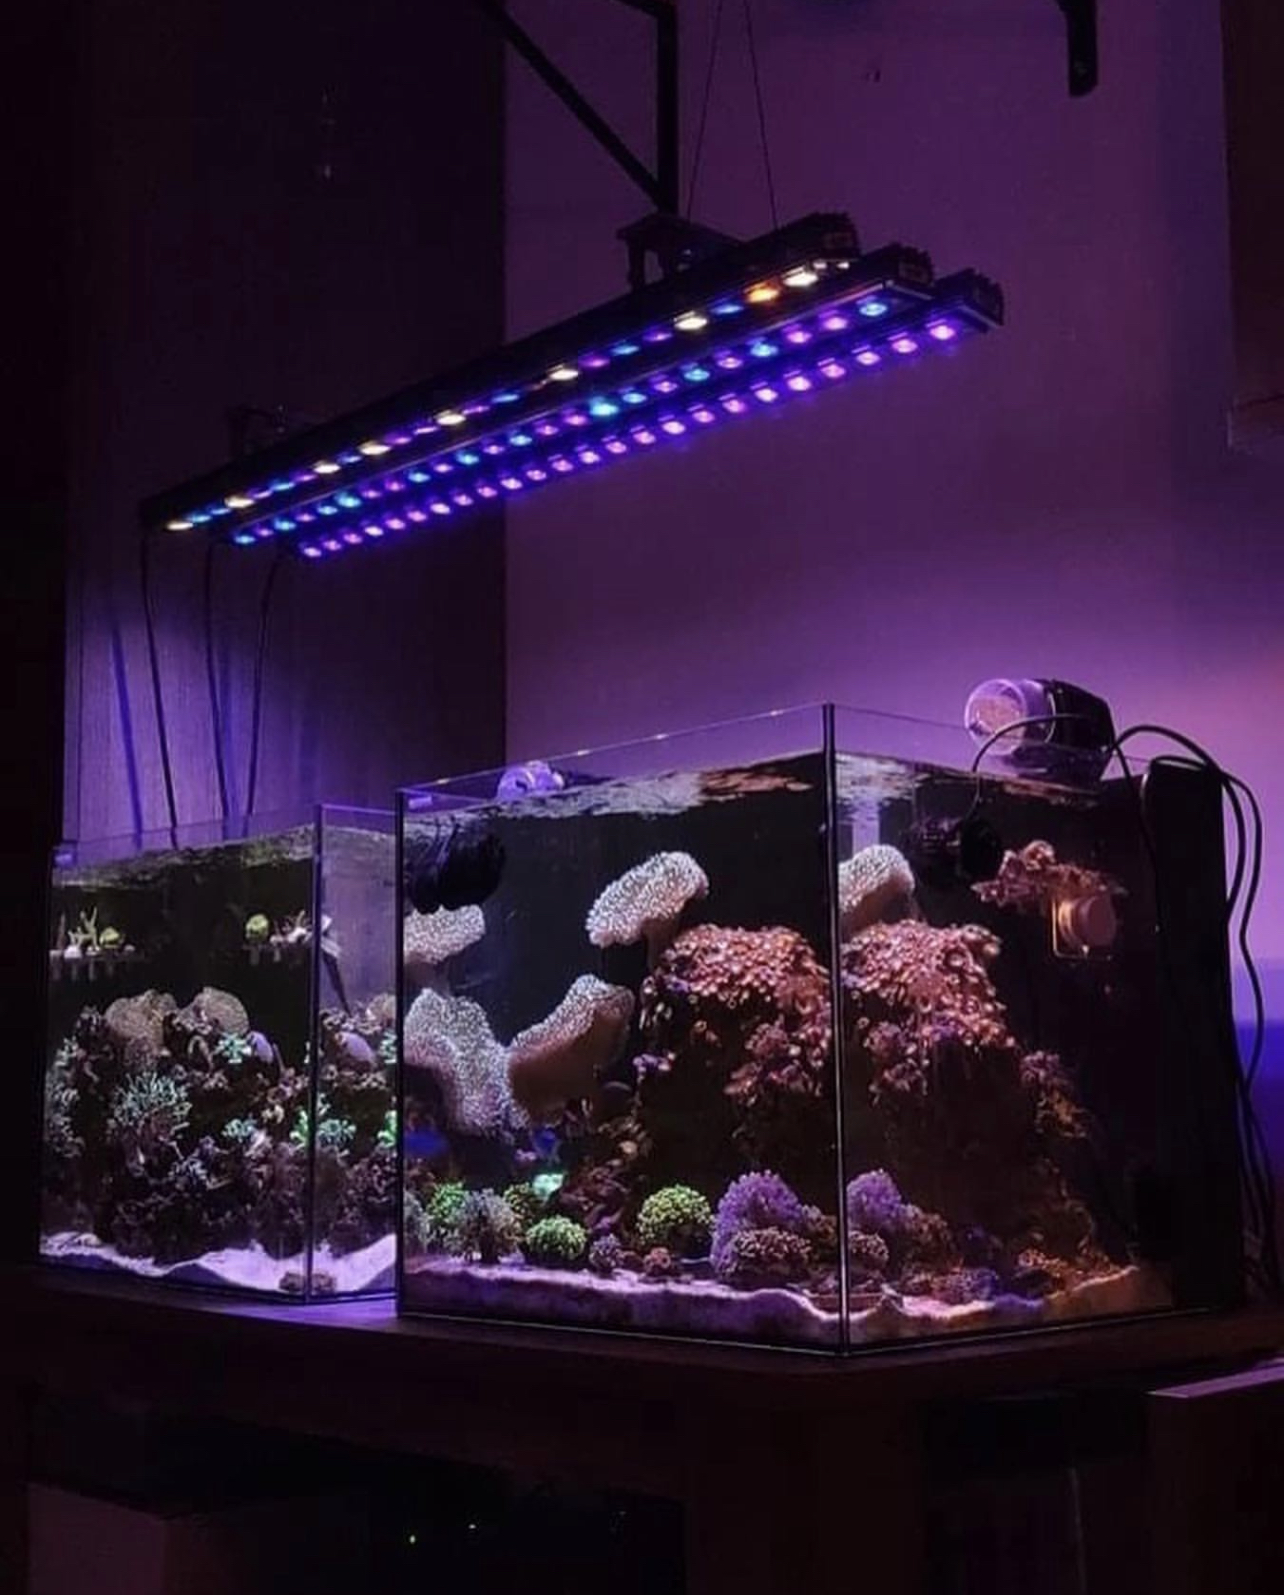 OR3 150 / 120 / 90 / 60 Reef Bar LED Light • Orphek Reef Aquarium LED  Lighting